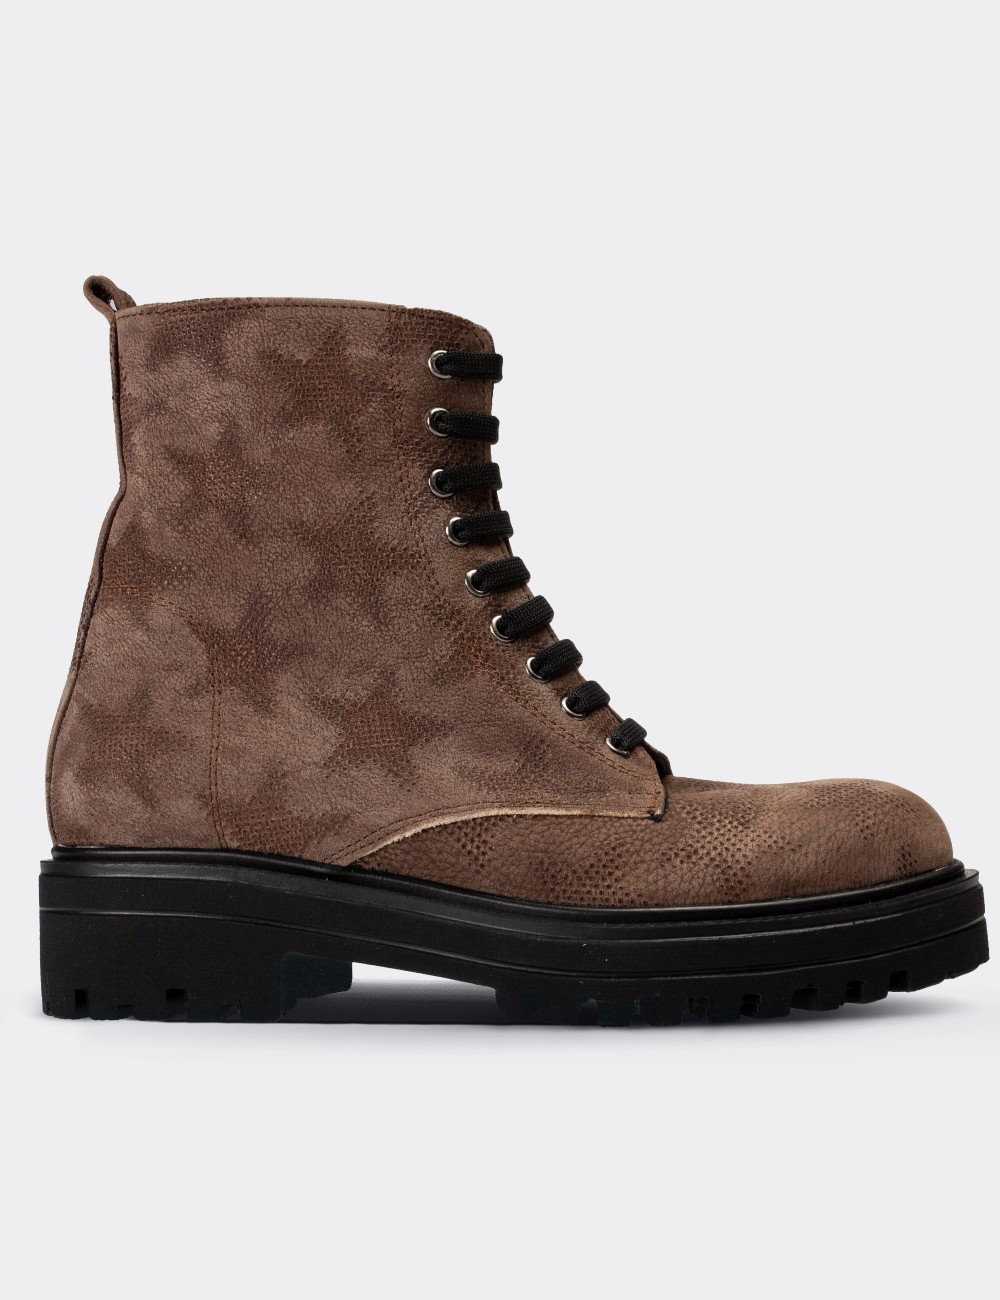 Sandstone Suede Leather Postal Boots - 01814ZVZNE01